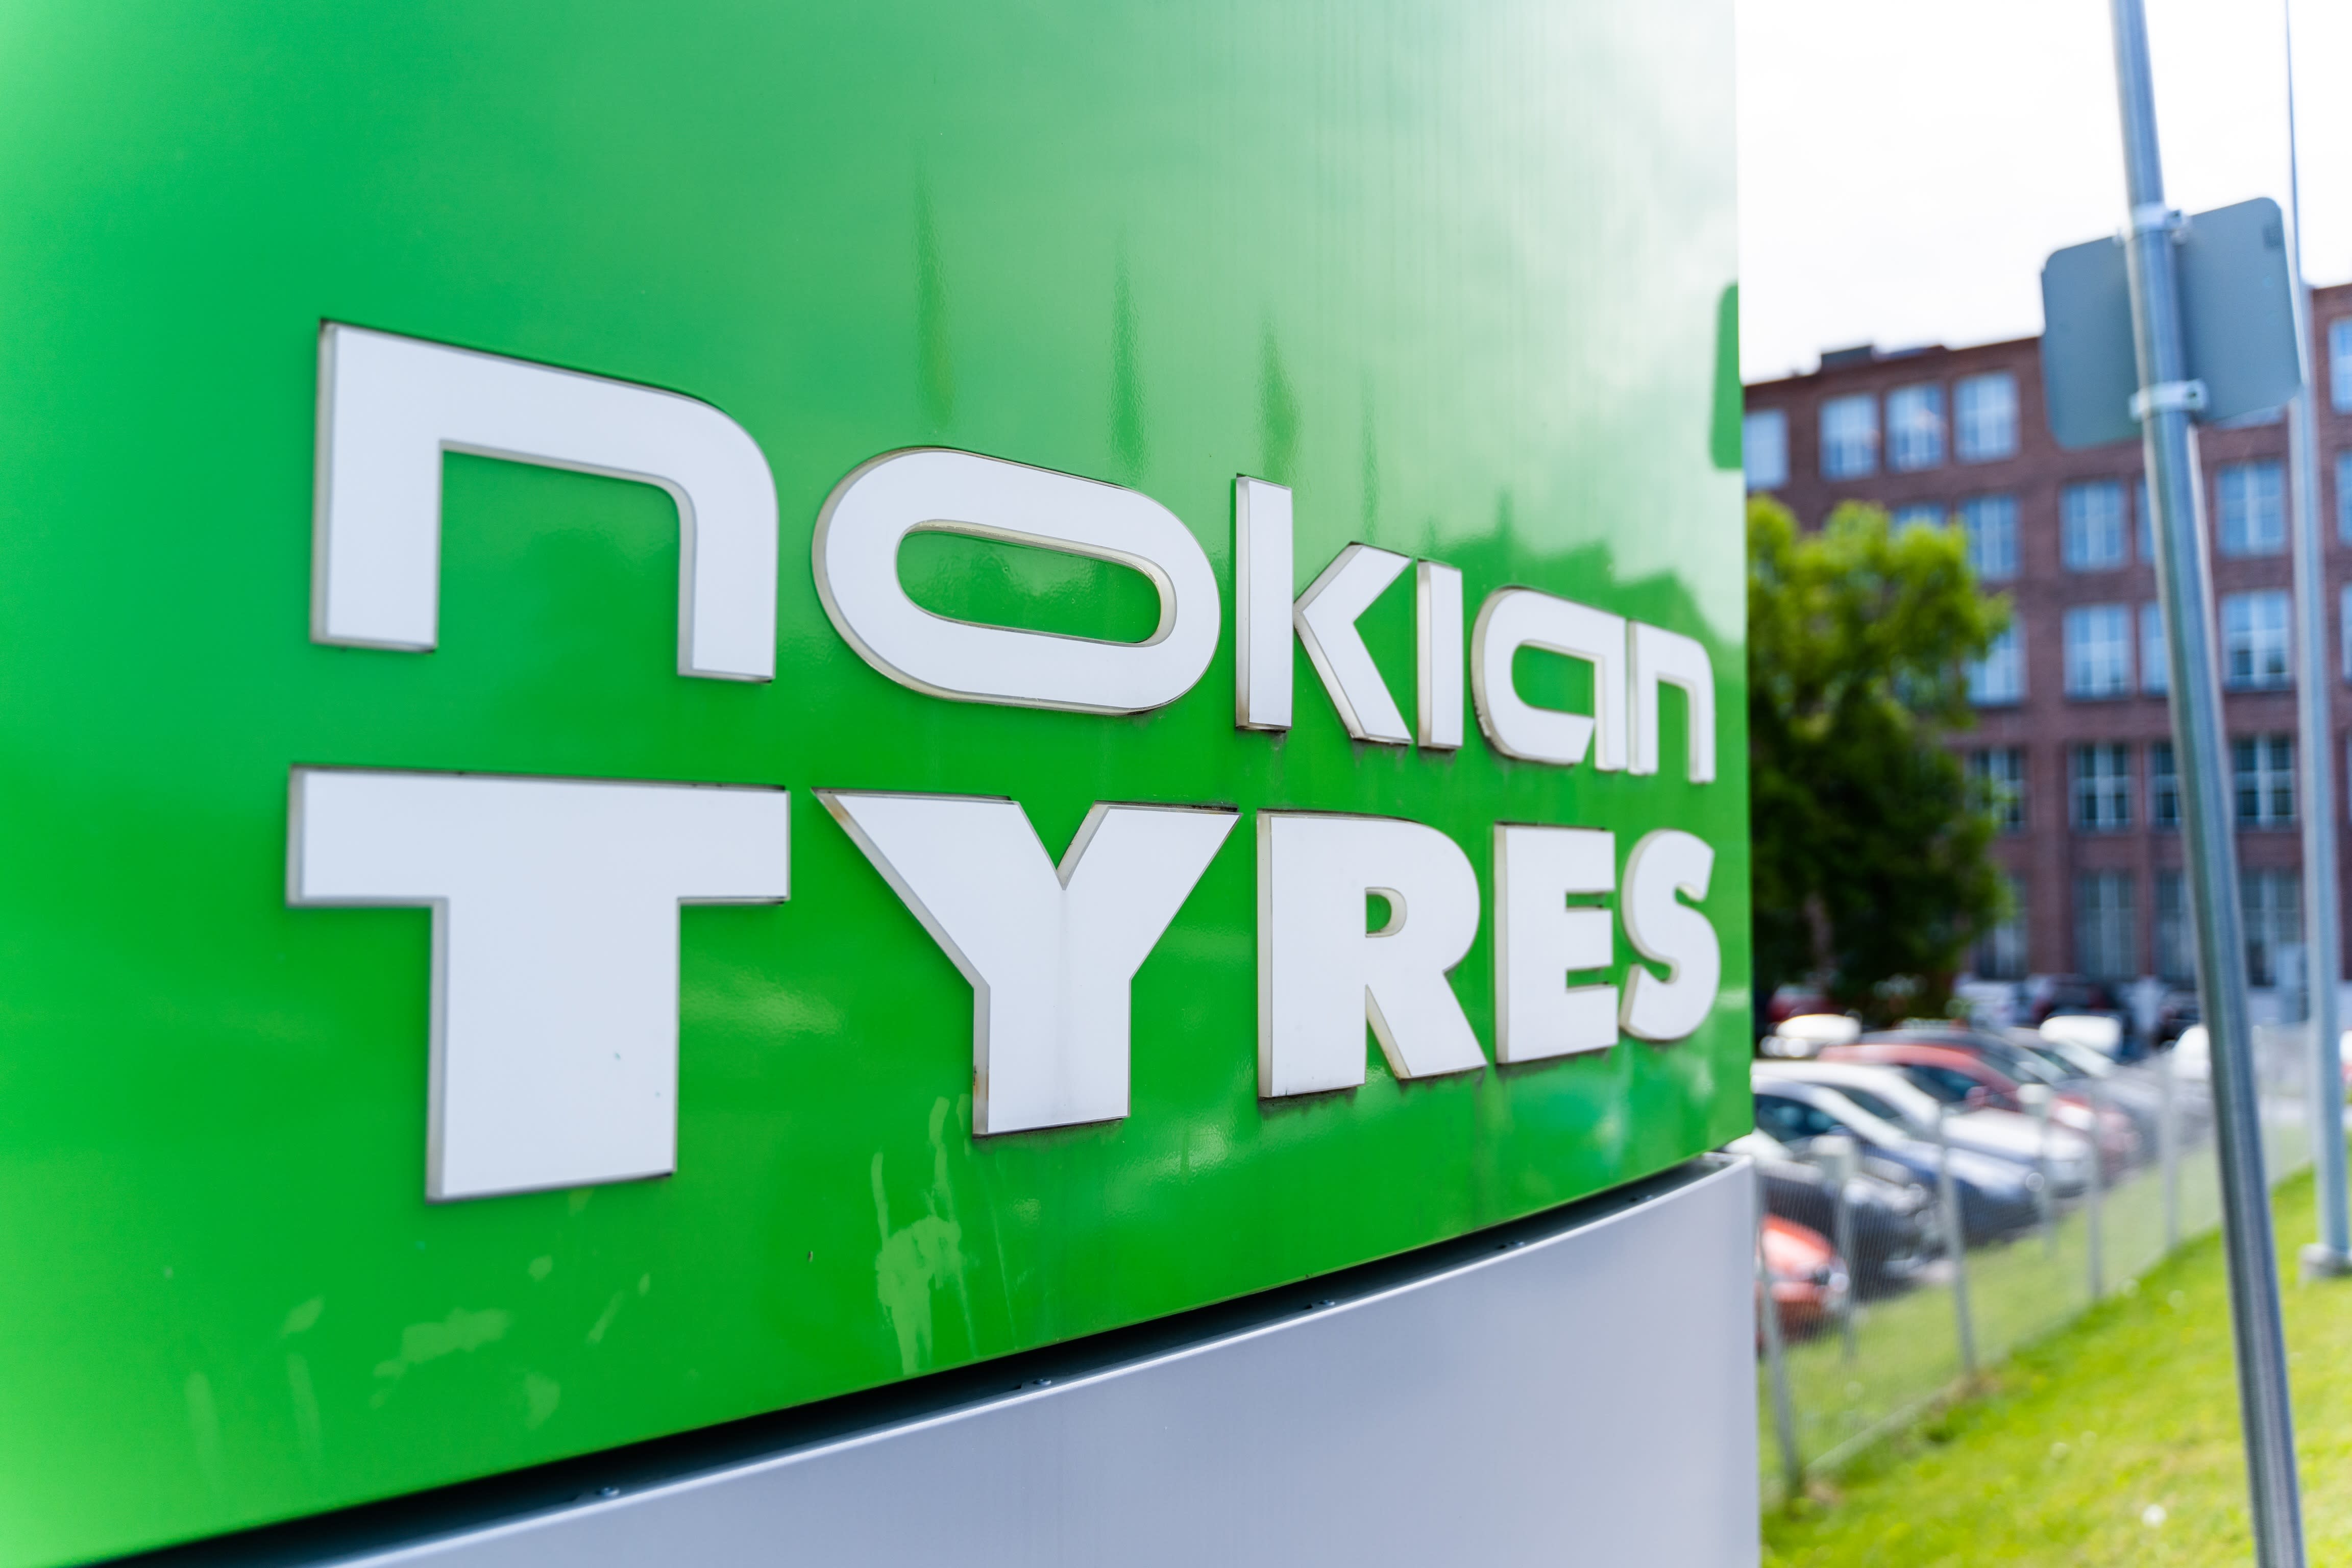 Nokian Renkaat는 대형 타이어 사업부 직원 160명을 모두 해고할 예정입니다.